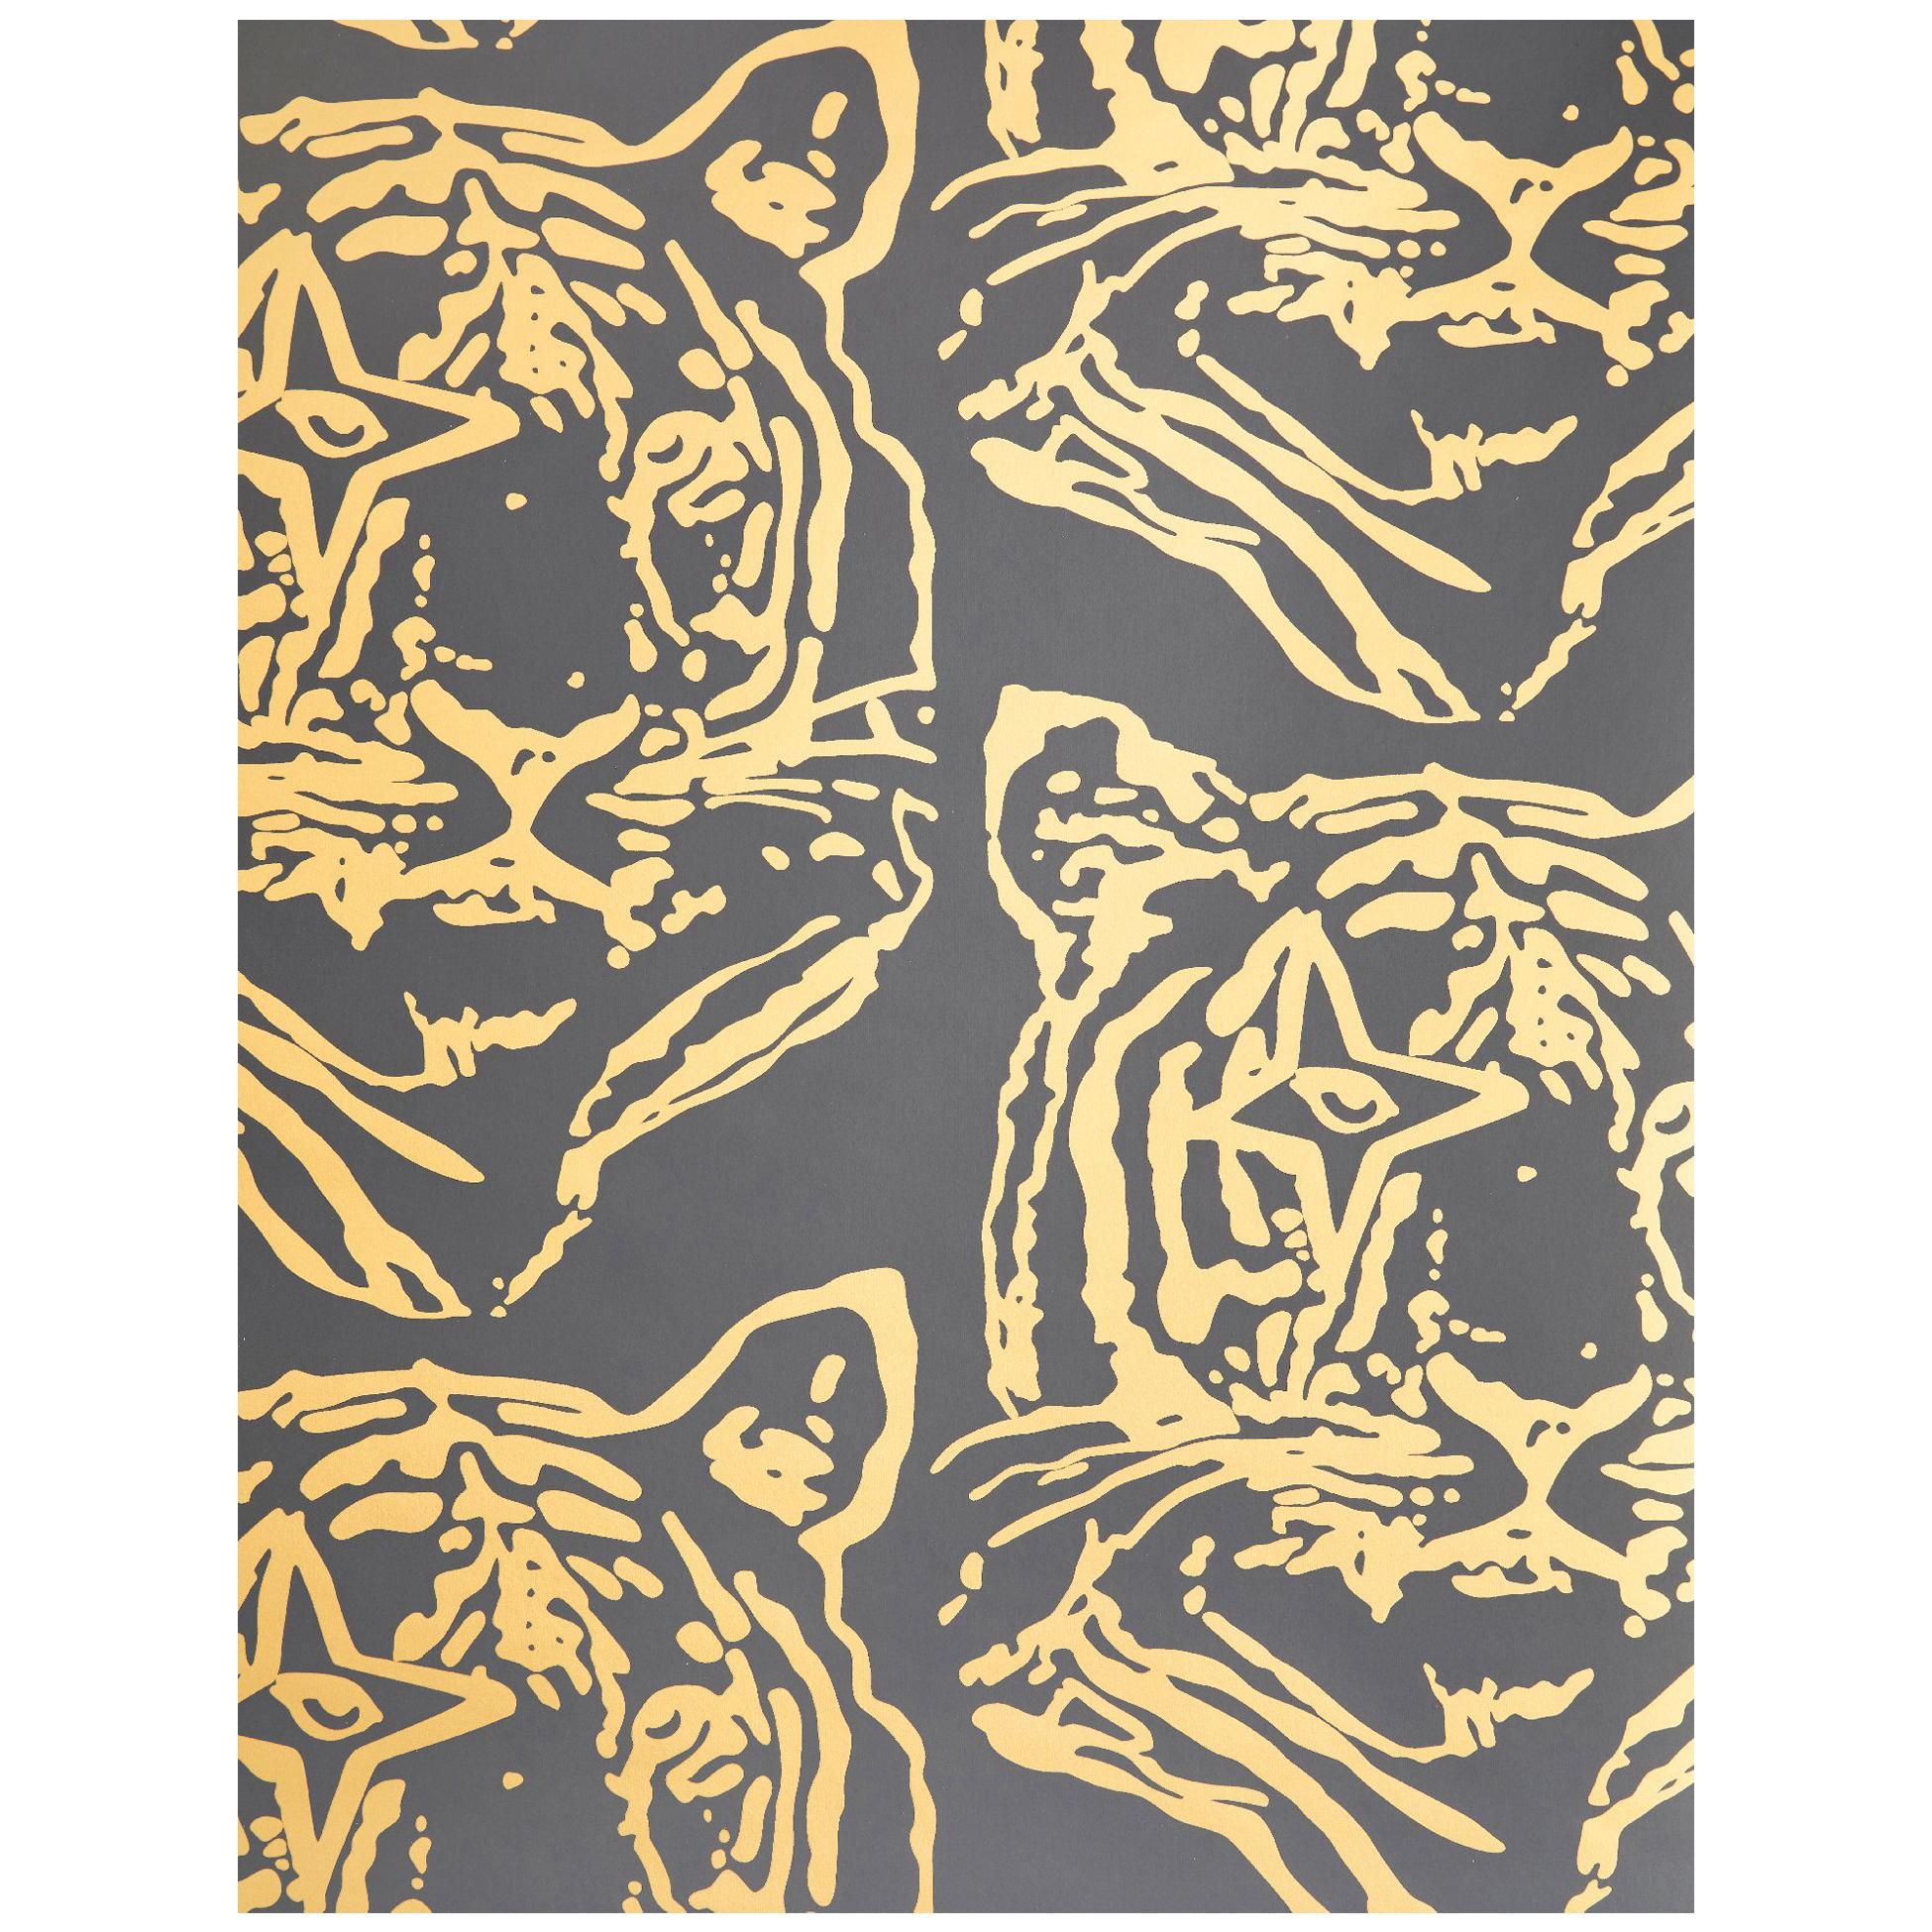 Star Tiger Designer Wallpaper in Eclipse 'Metallic Gold on Black' For Sale